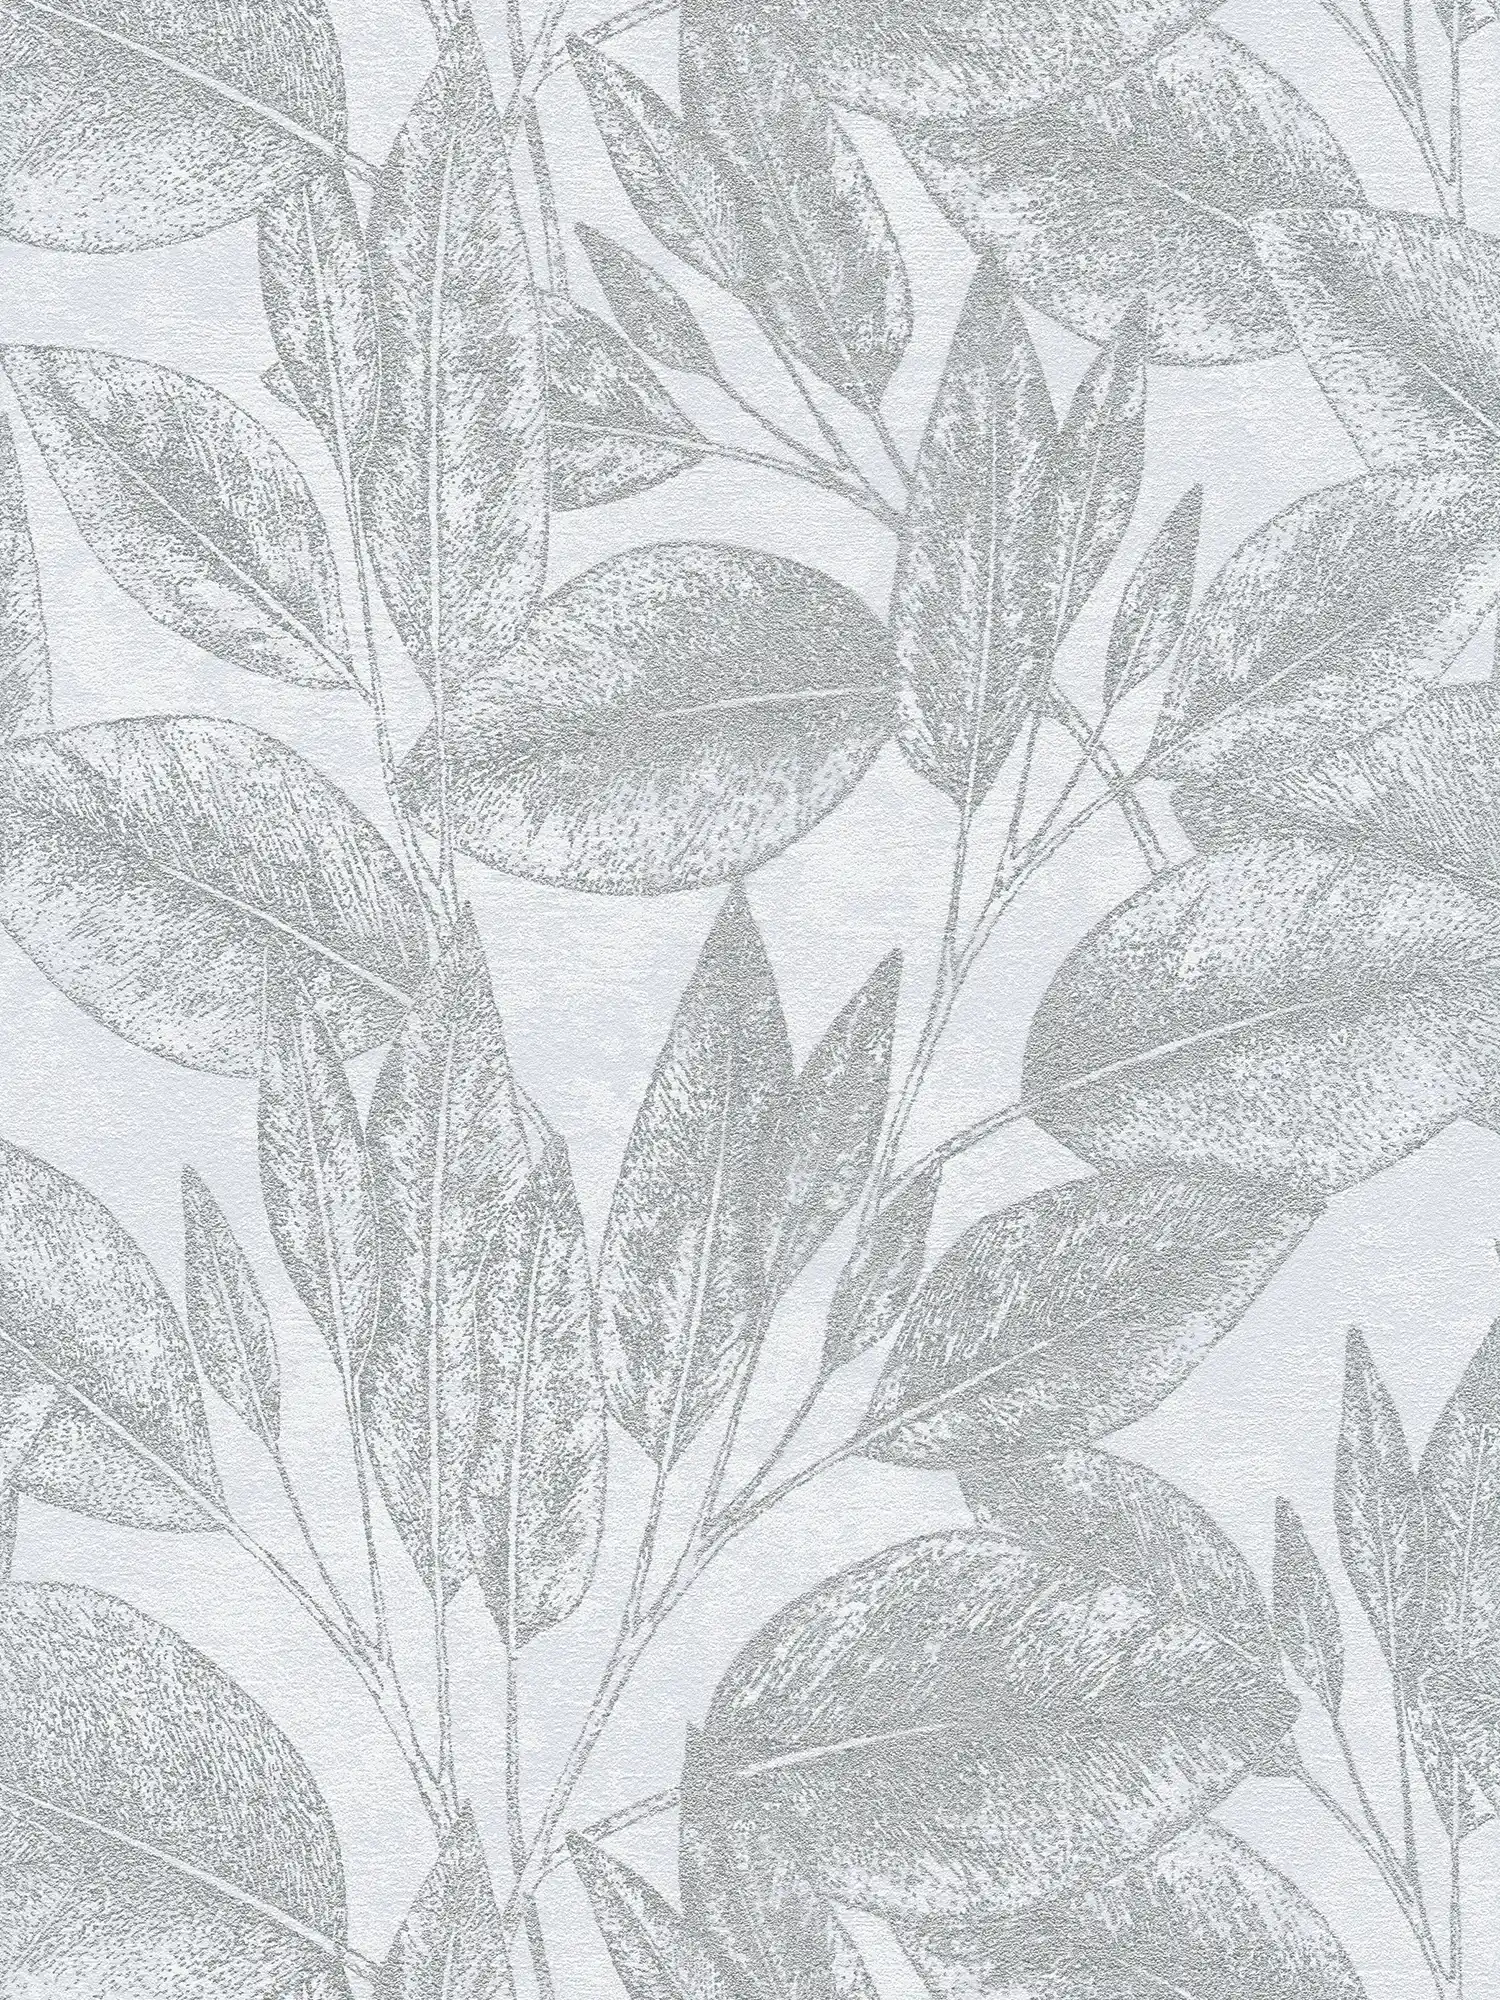 Blättermuster Tapete im Vintage Look – Grau, Metallic
